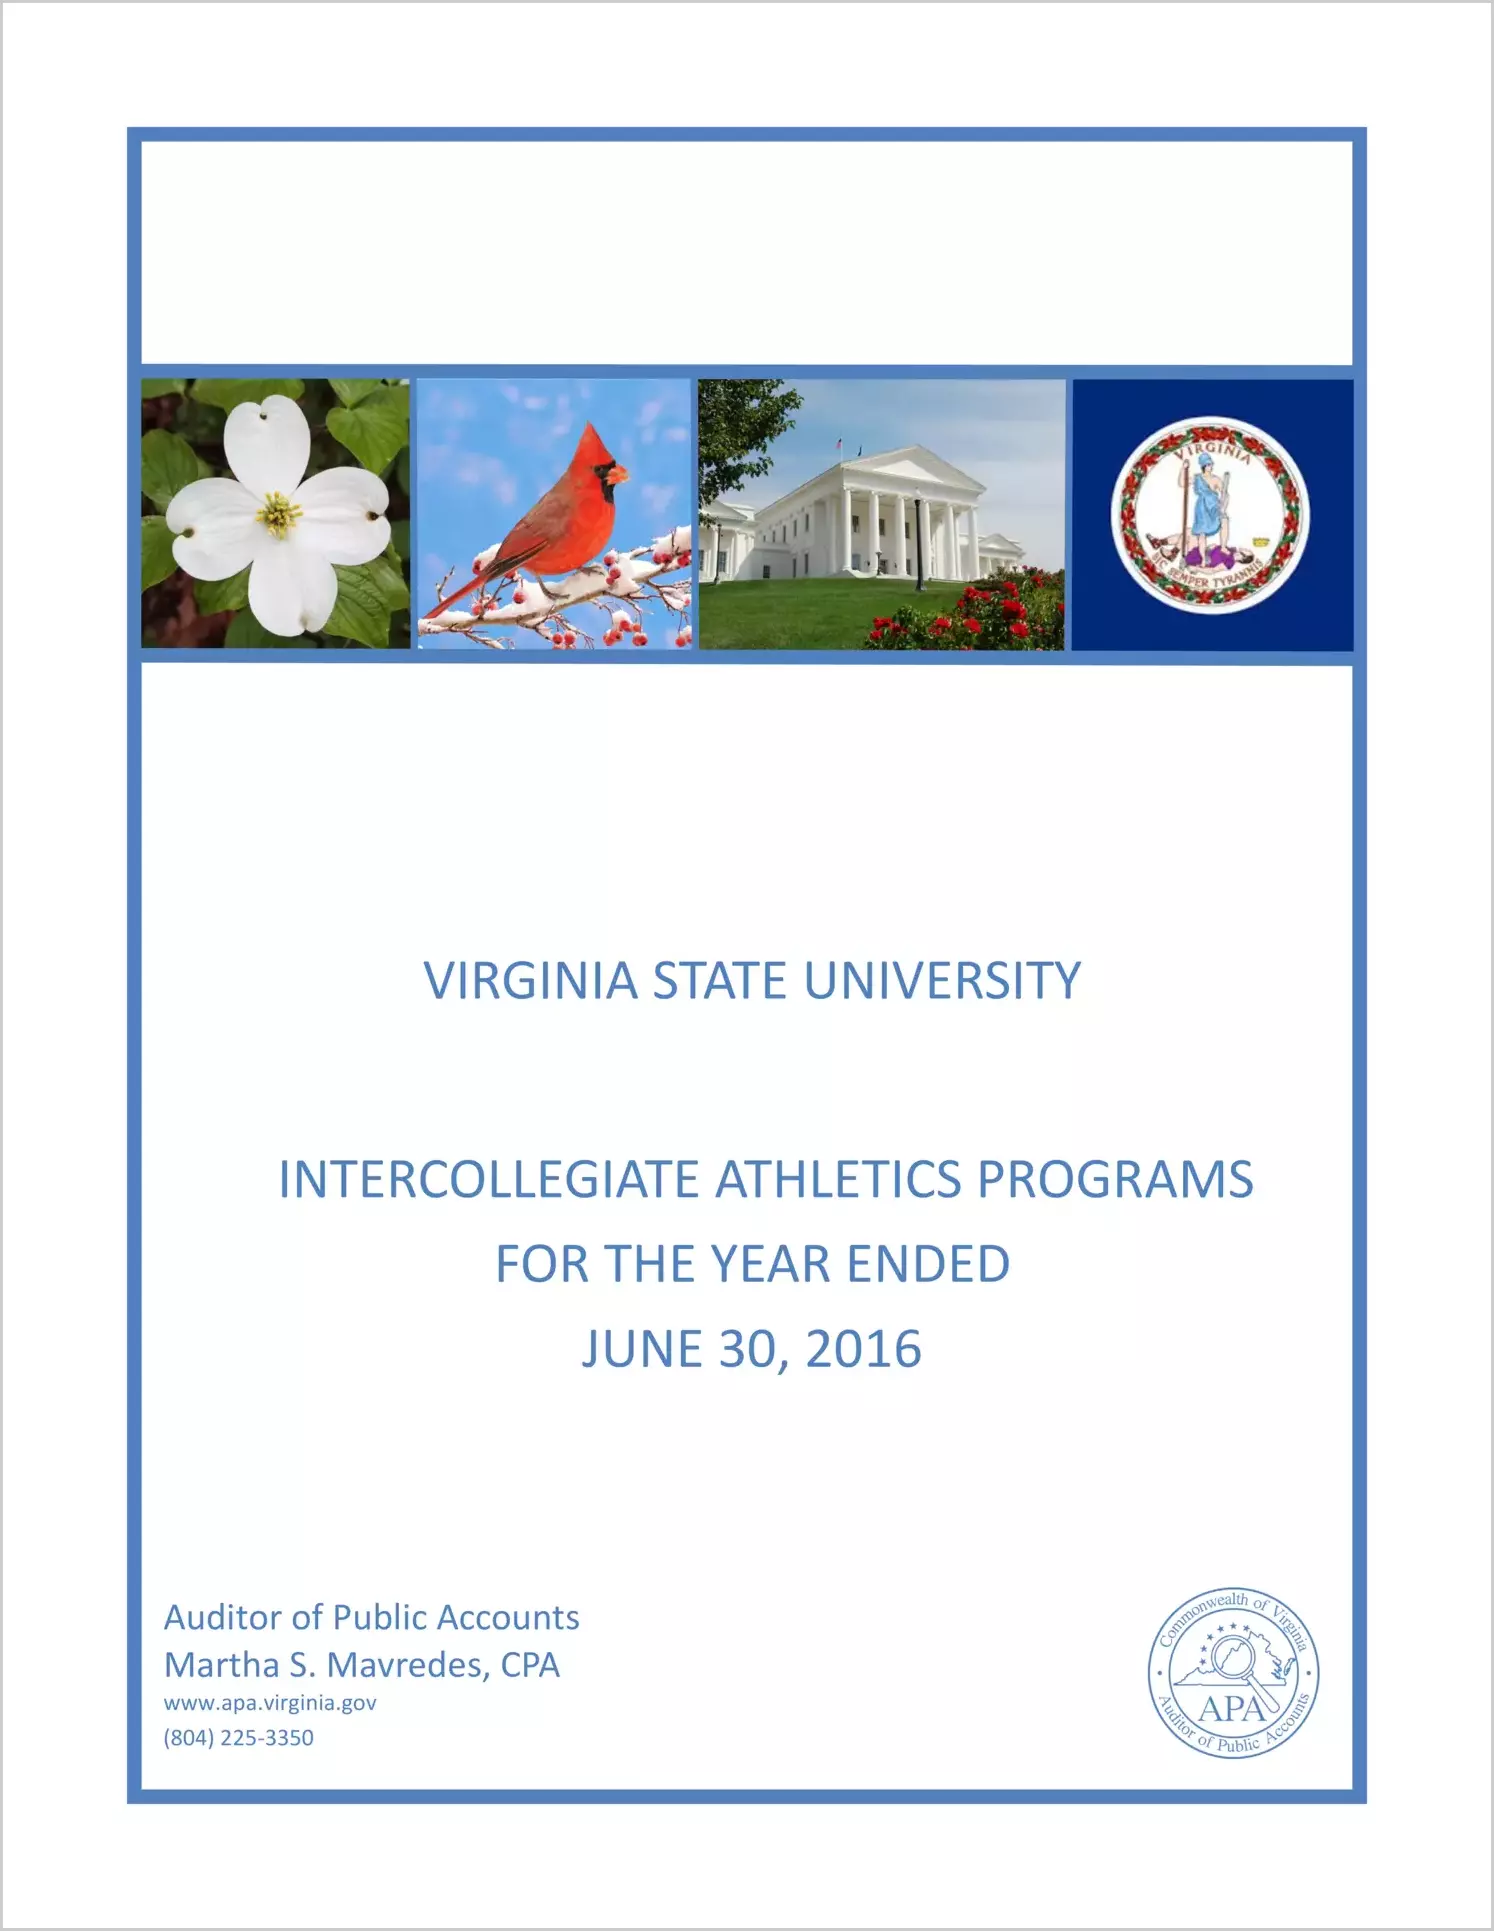 Virginia State University Intercollegiate Athletics Programs for the year ended June 30, 2016